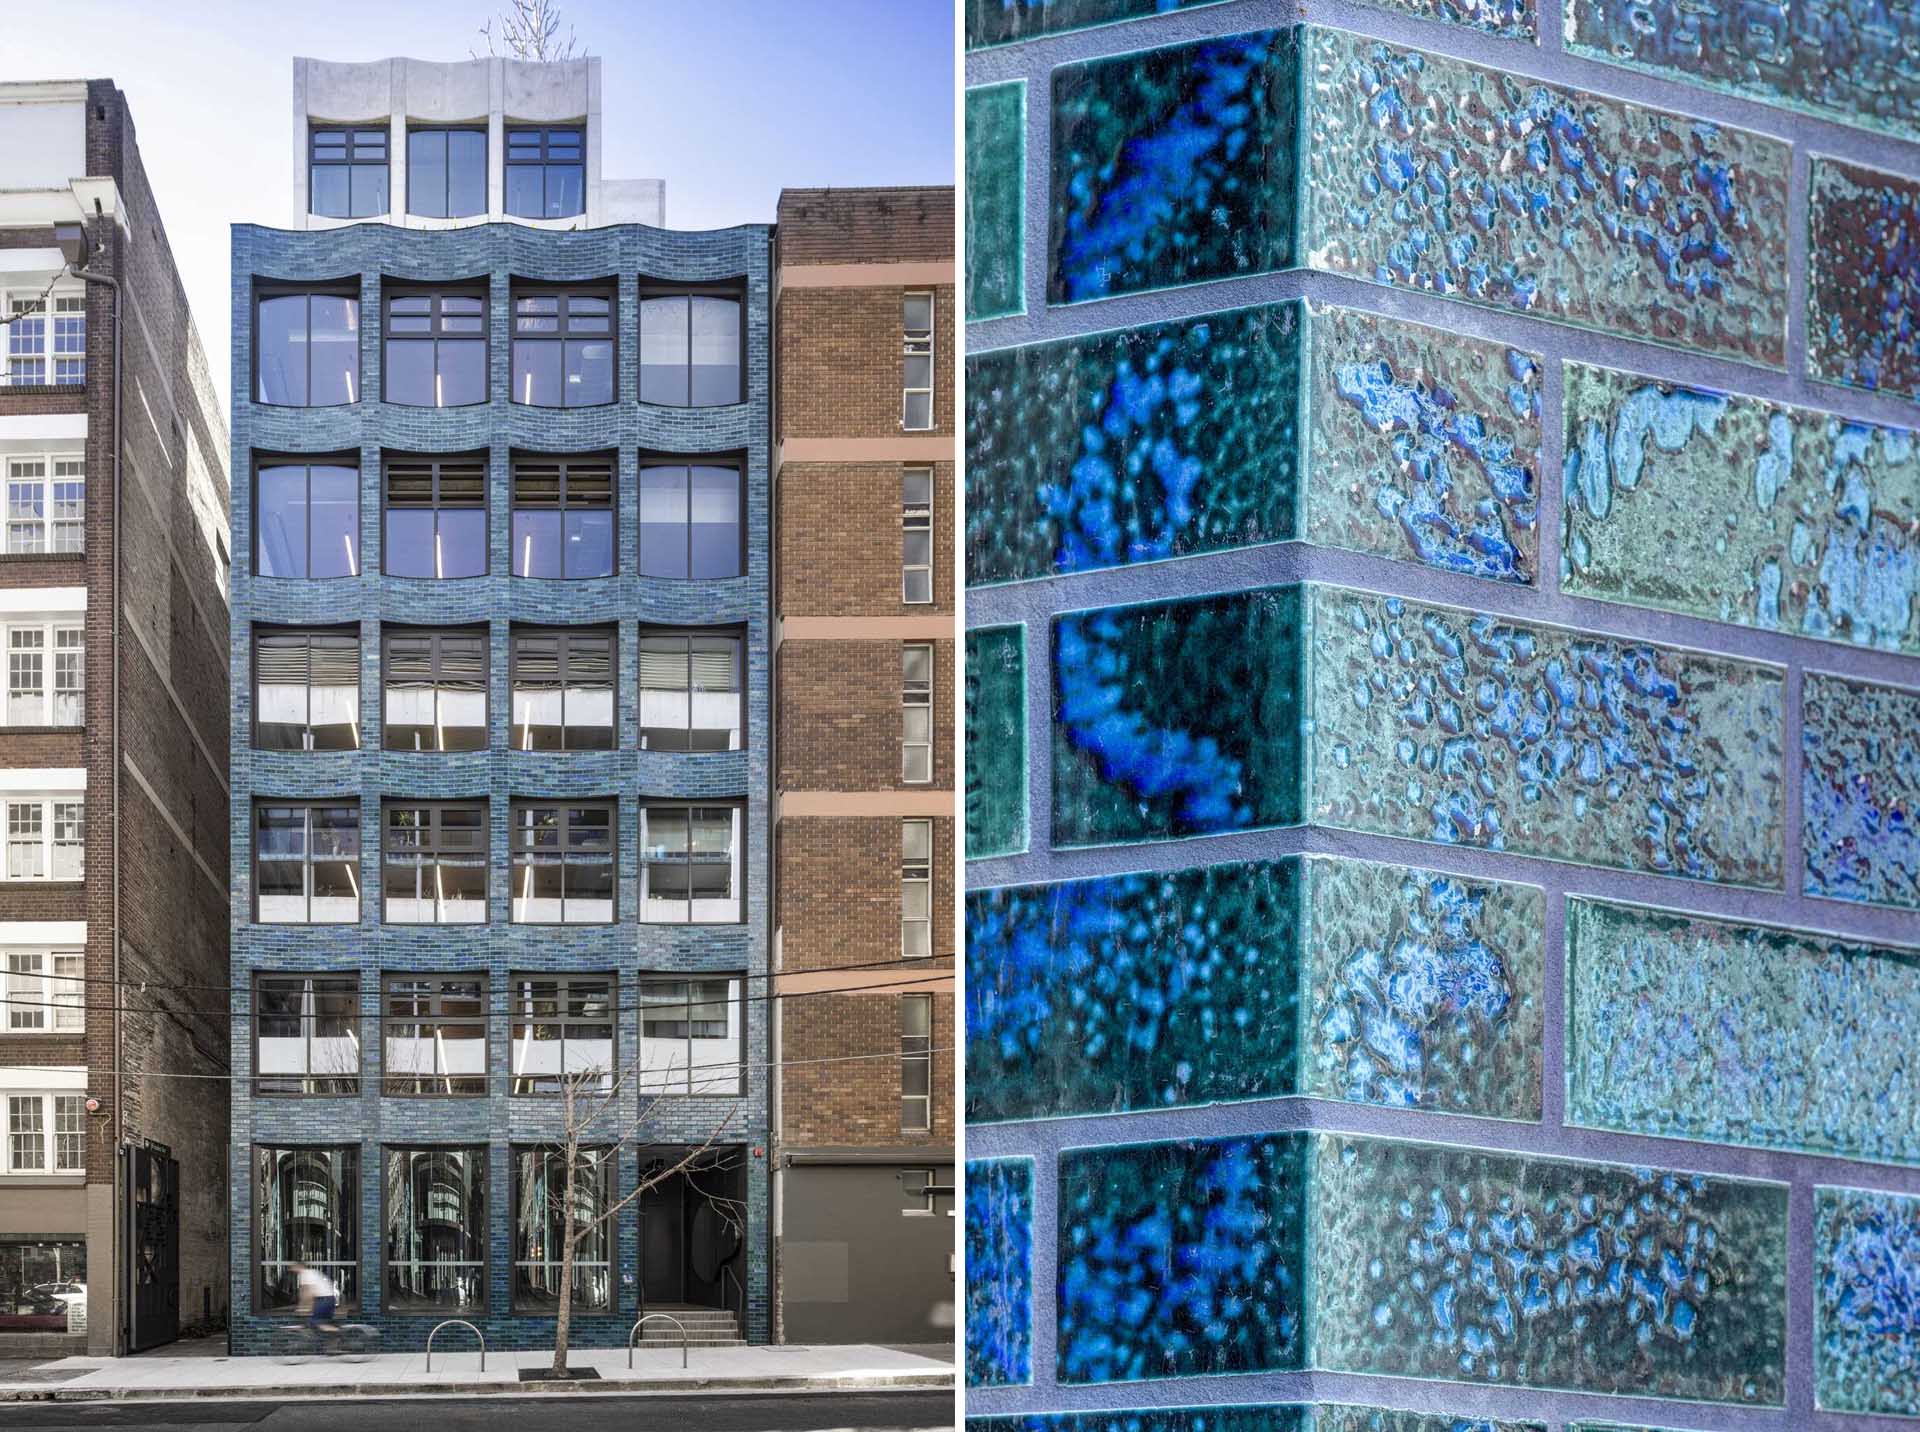 A modern building with a scalloped facade and aquamarine glazed bricks.